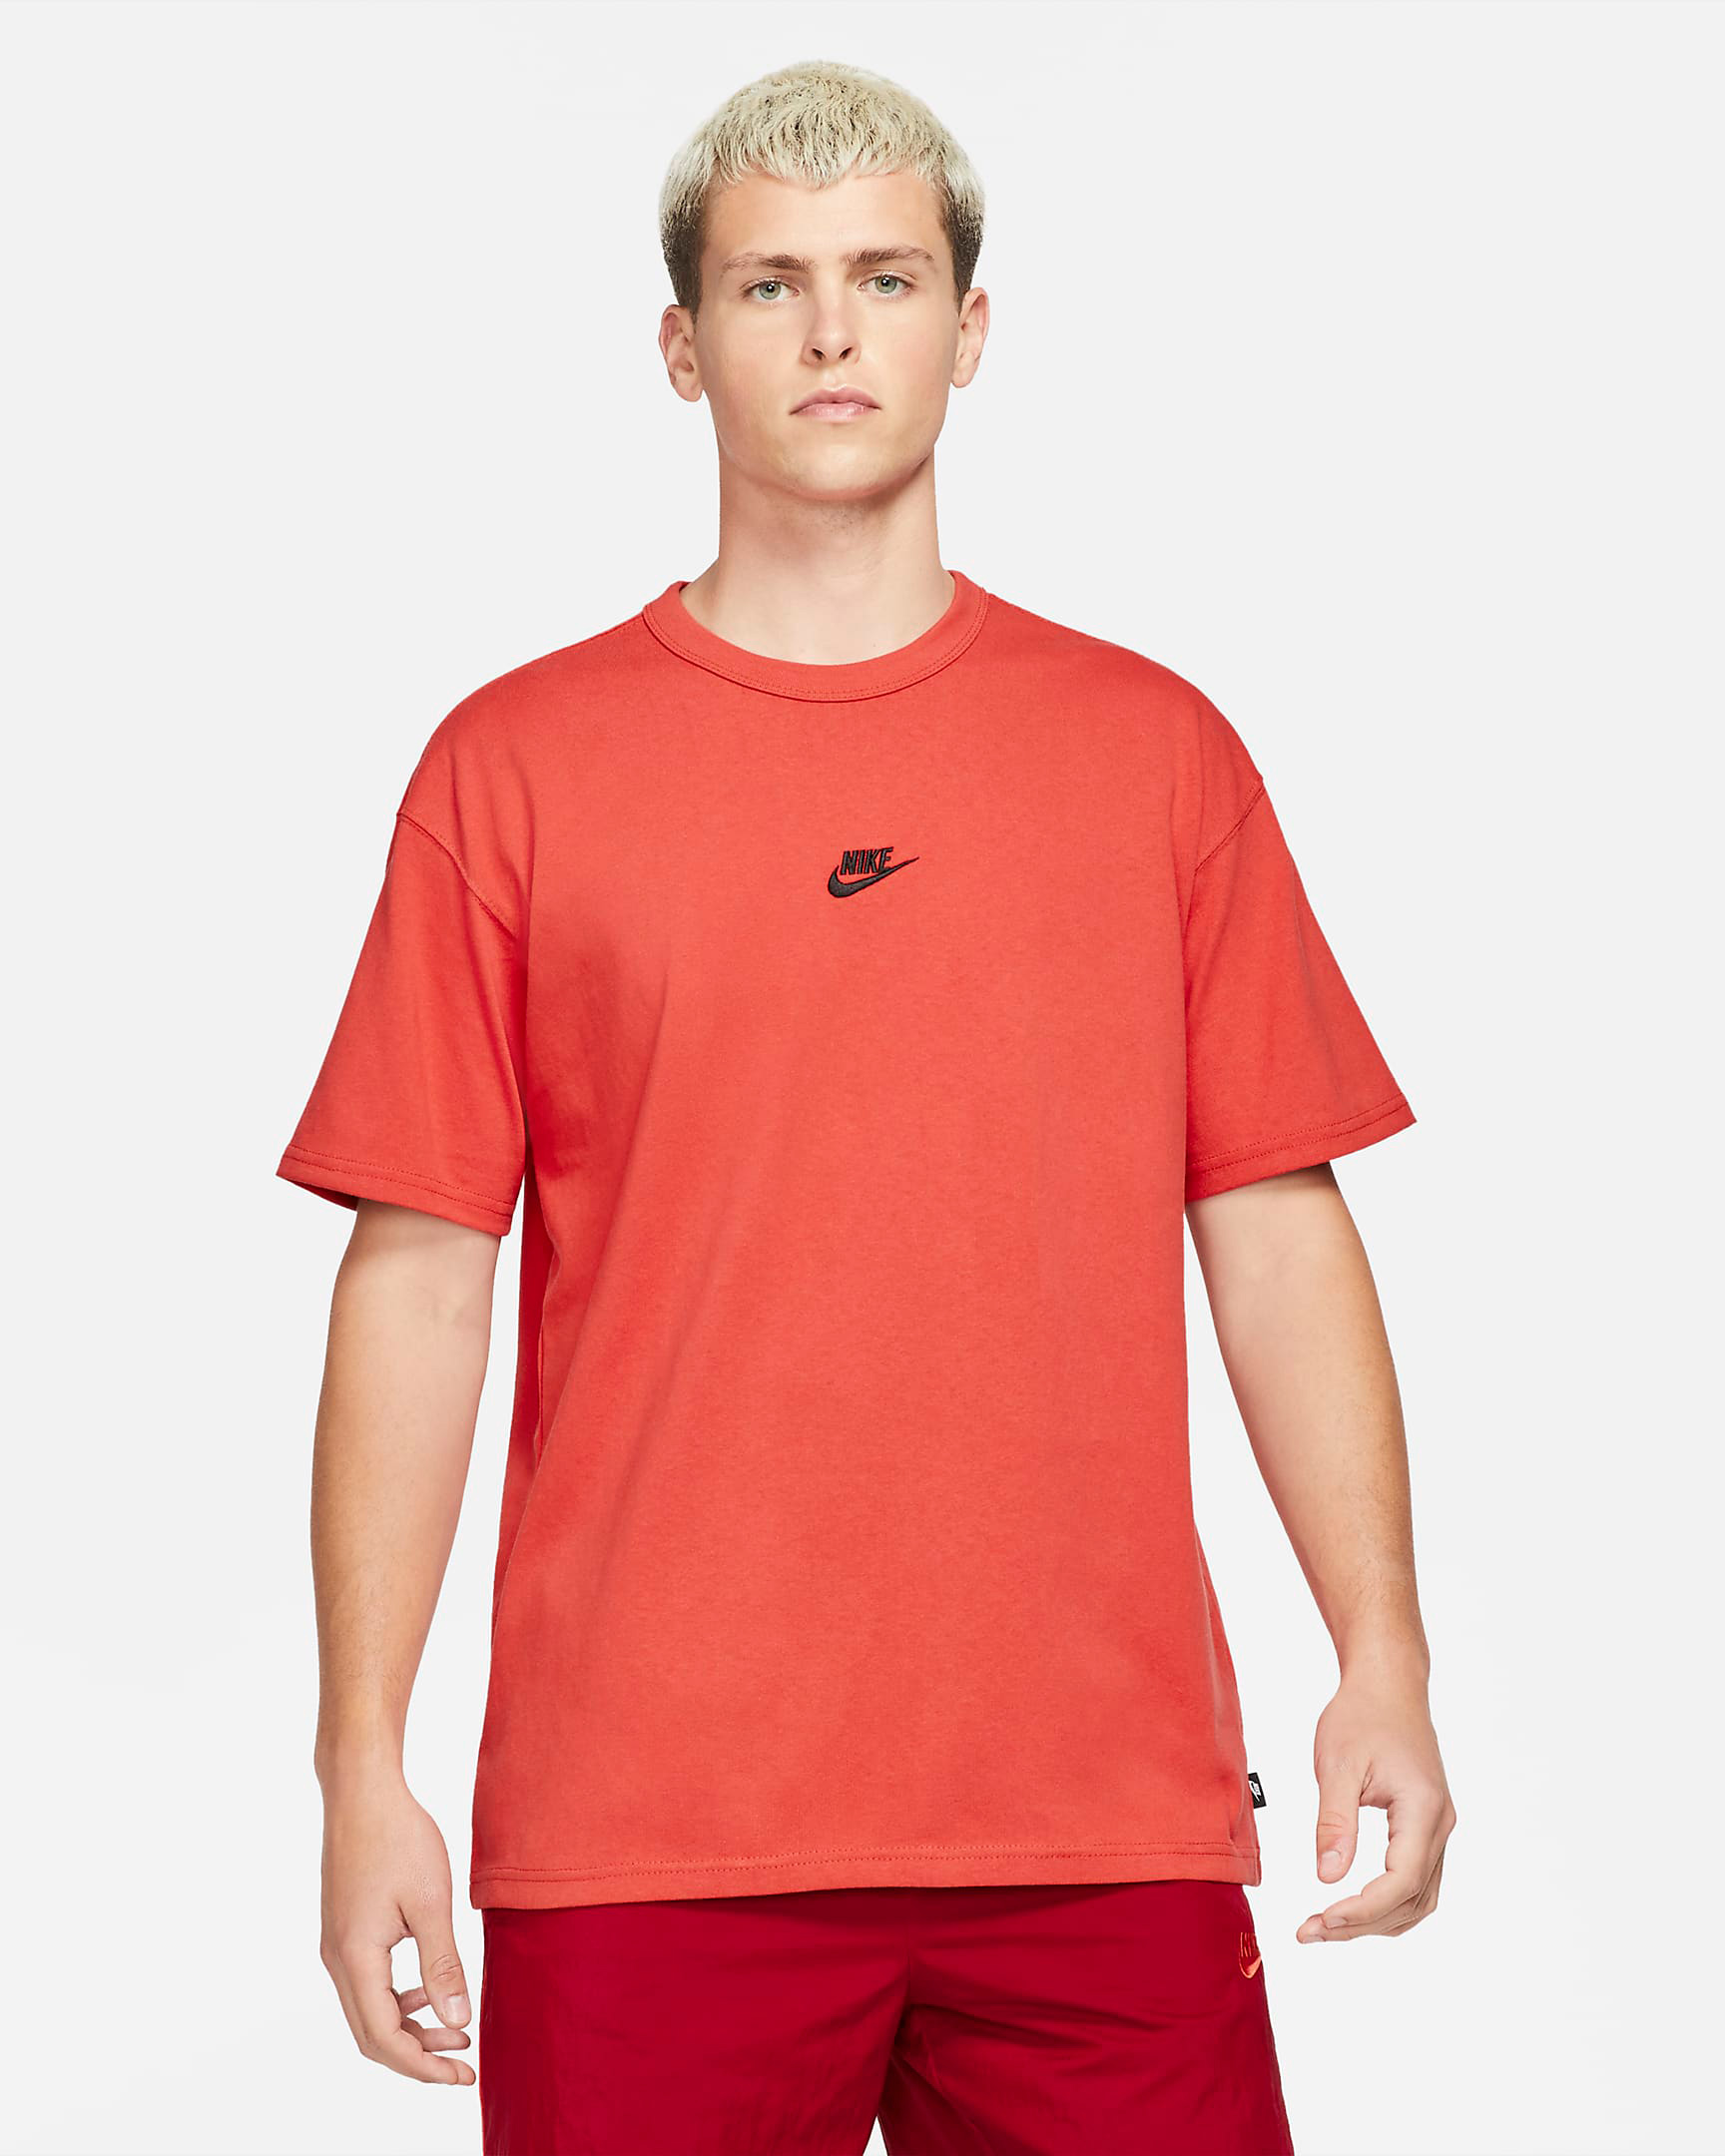 nike-lobster-premium-essential-t-shirt